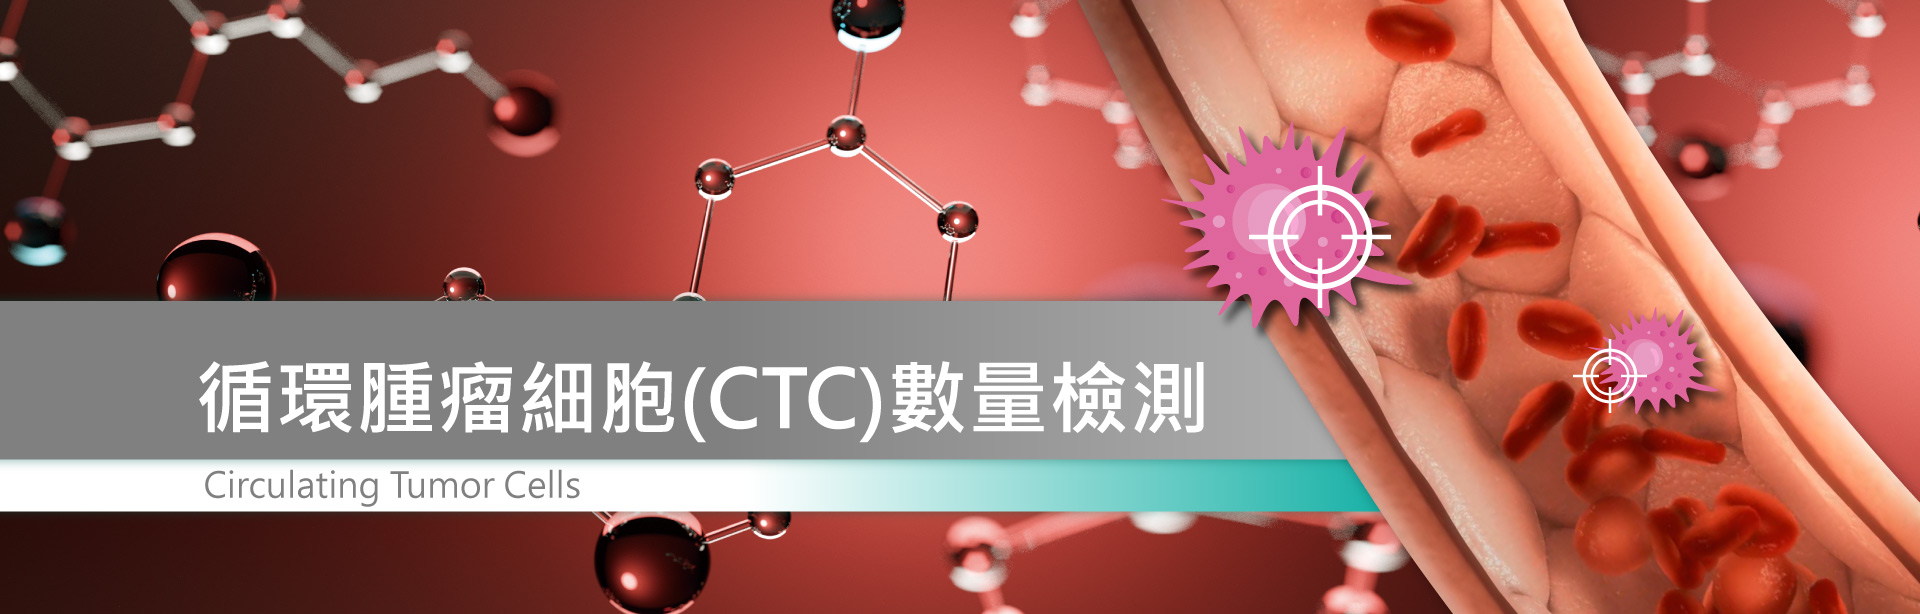 banner-循環腫瘤細胞(CTC)數量檢測形象廣告